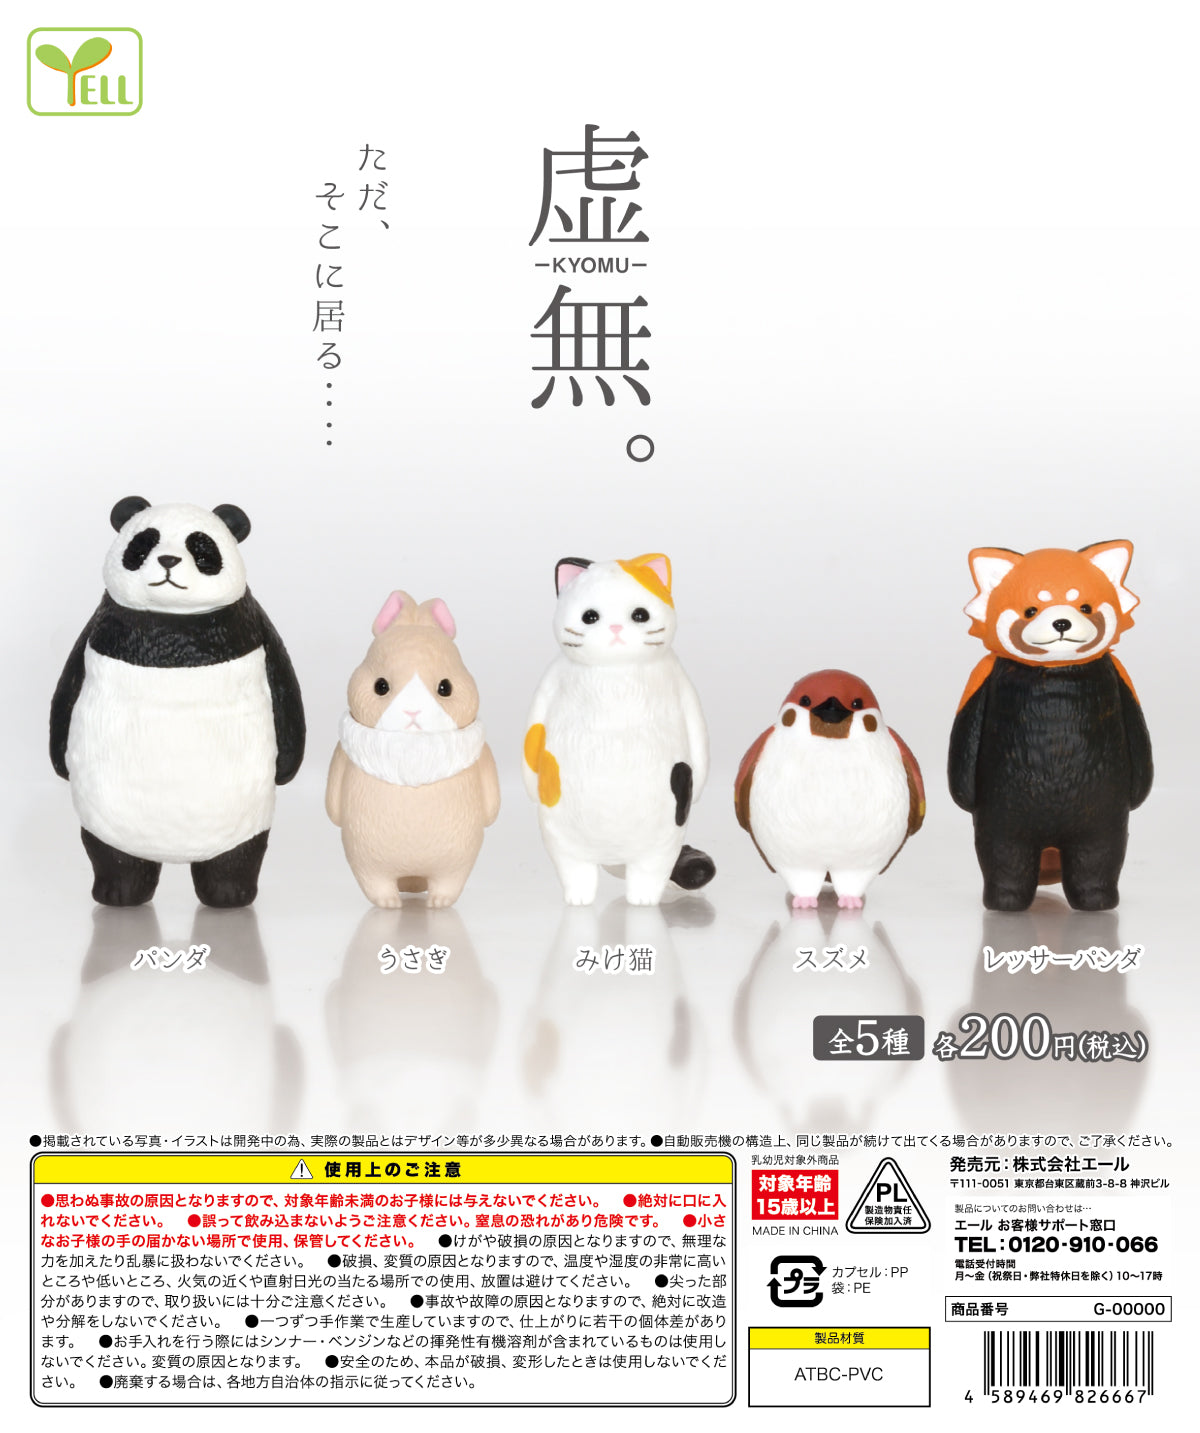 YELL KYOMU Capsule Toy Red Panda Mini Figure